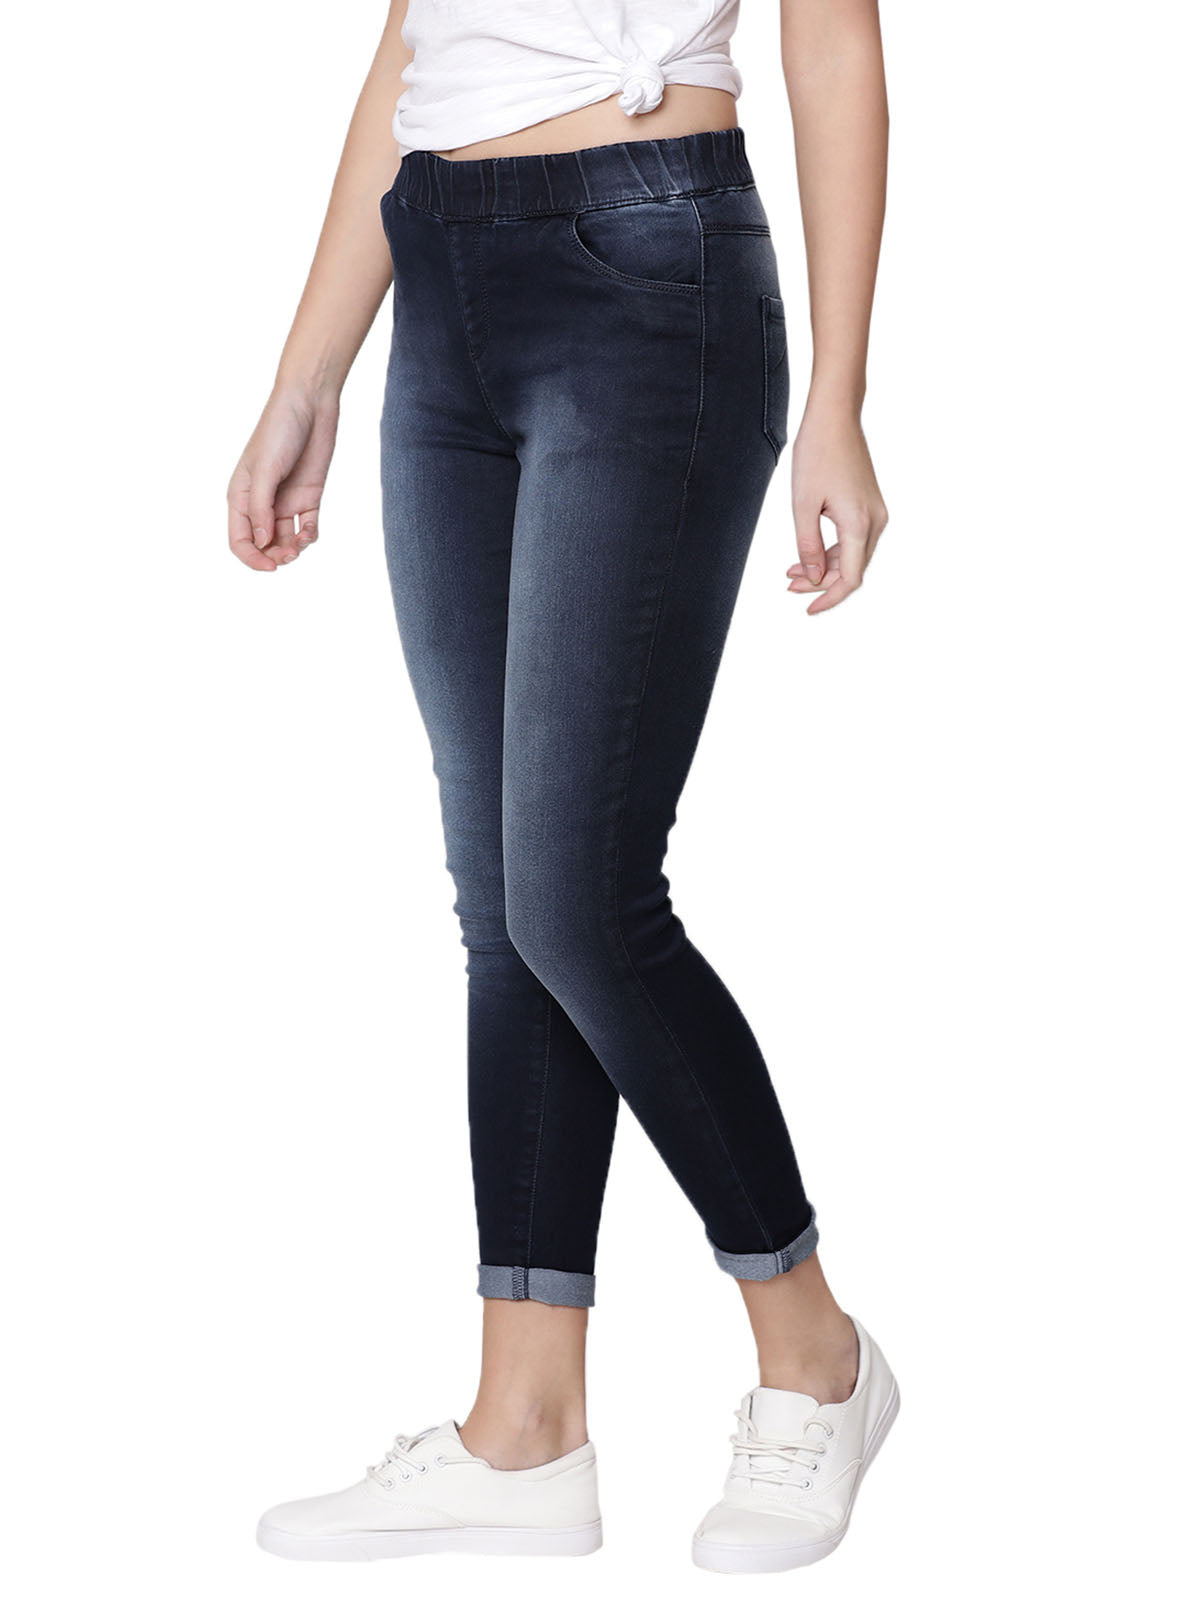 Women Darkt Blue Soft Elasticated Flexi Waist Cropped Length Clean Look Jeans